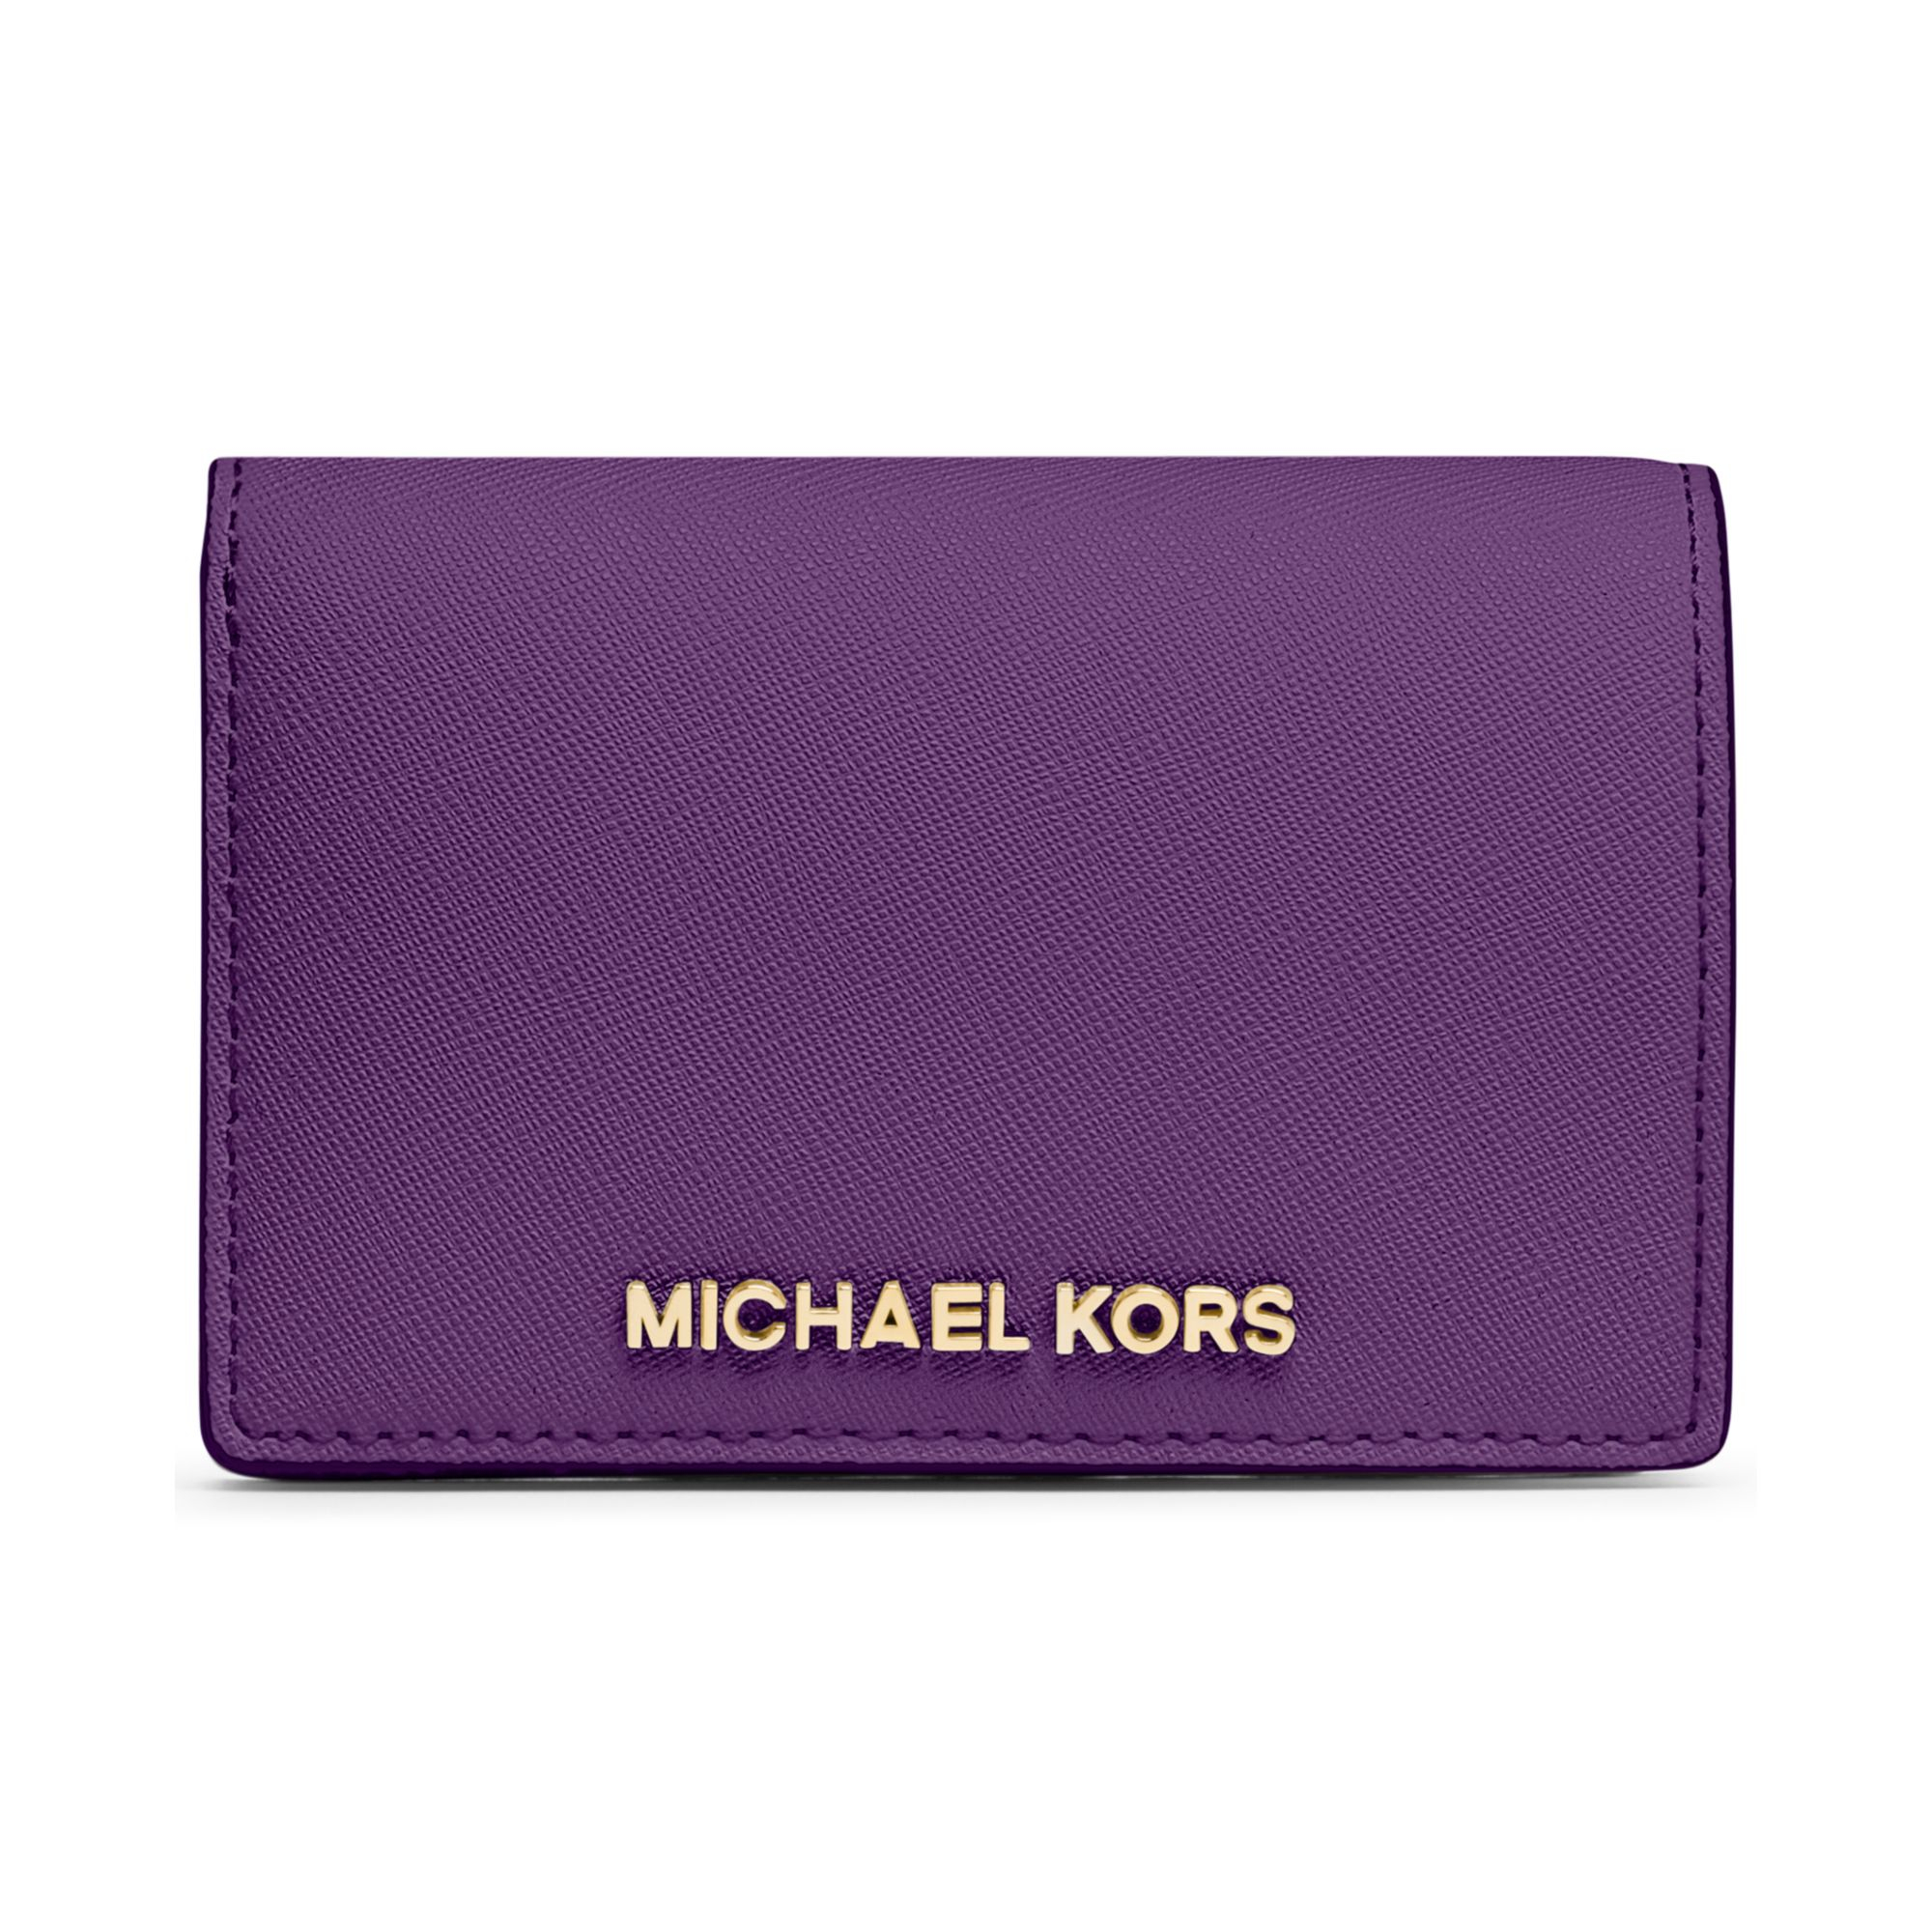 Michael Kors Jet Set Travel Medium Slim Wallet in Purple (VIOLET) | Lyst